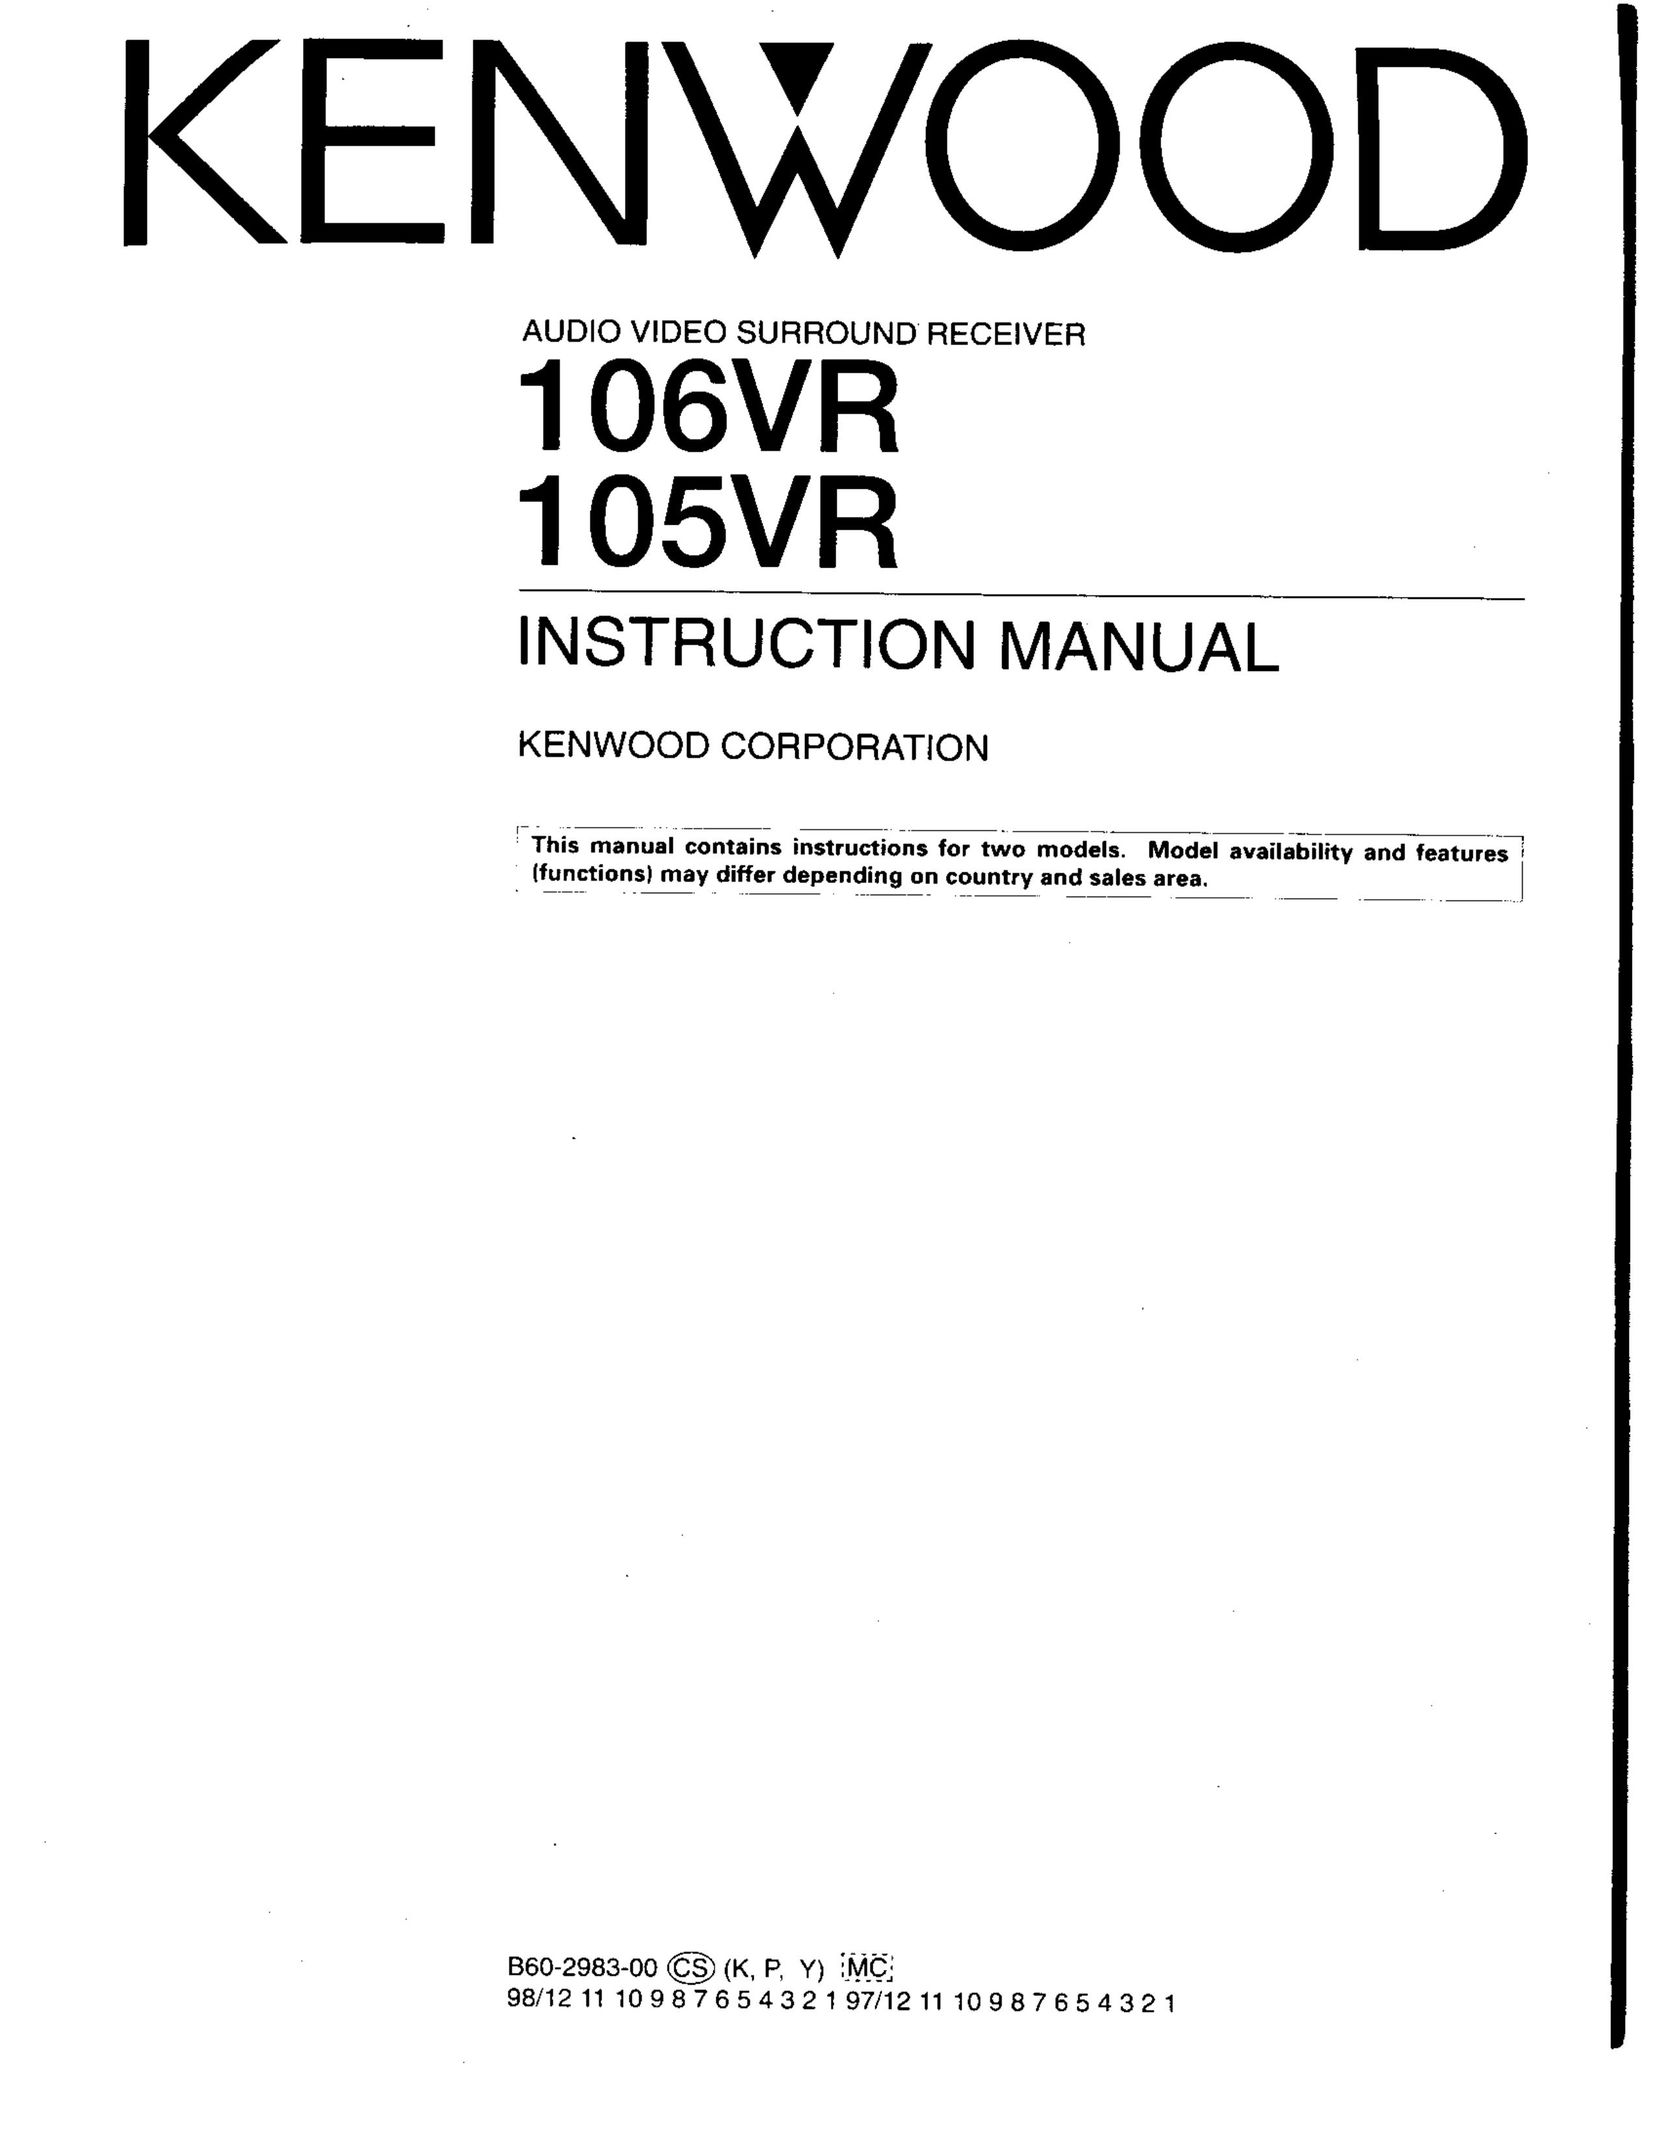 Kenwood 105VR Stereo Receiver User Manual